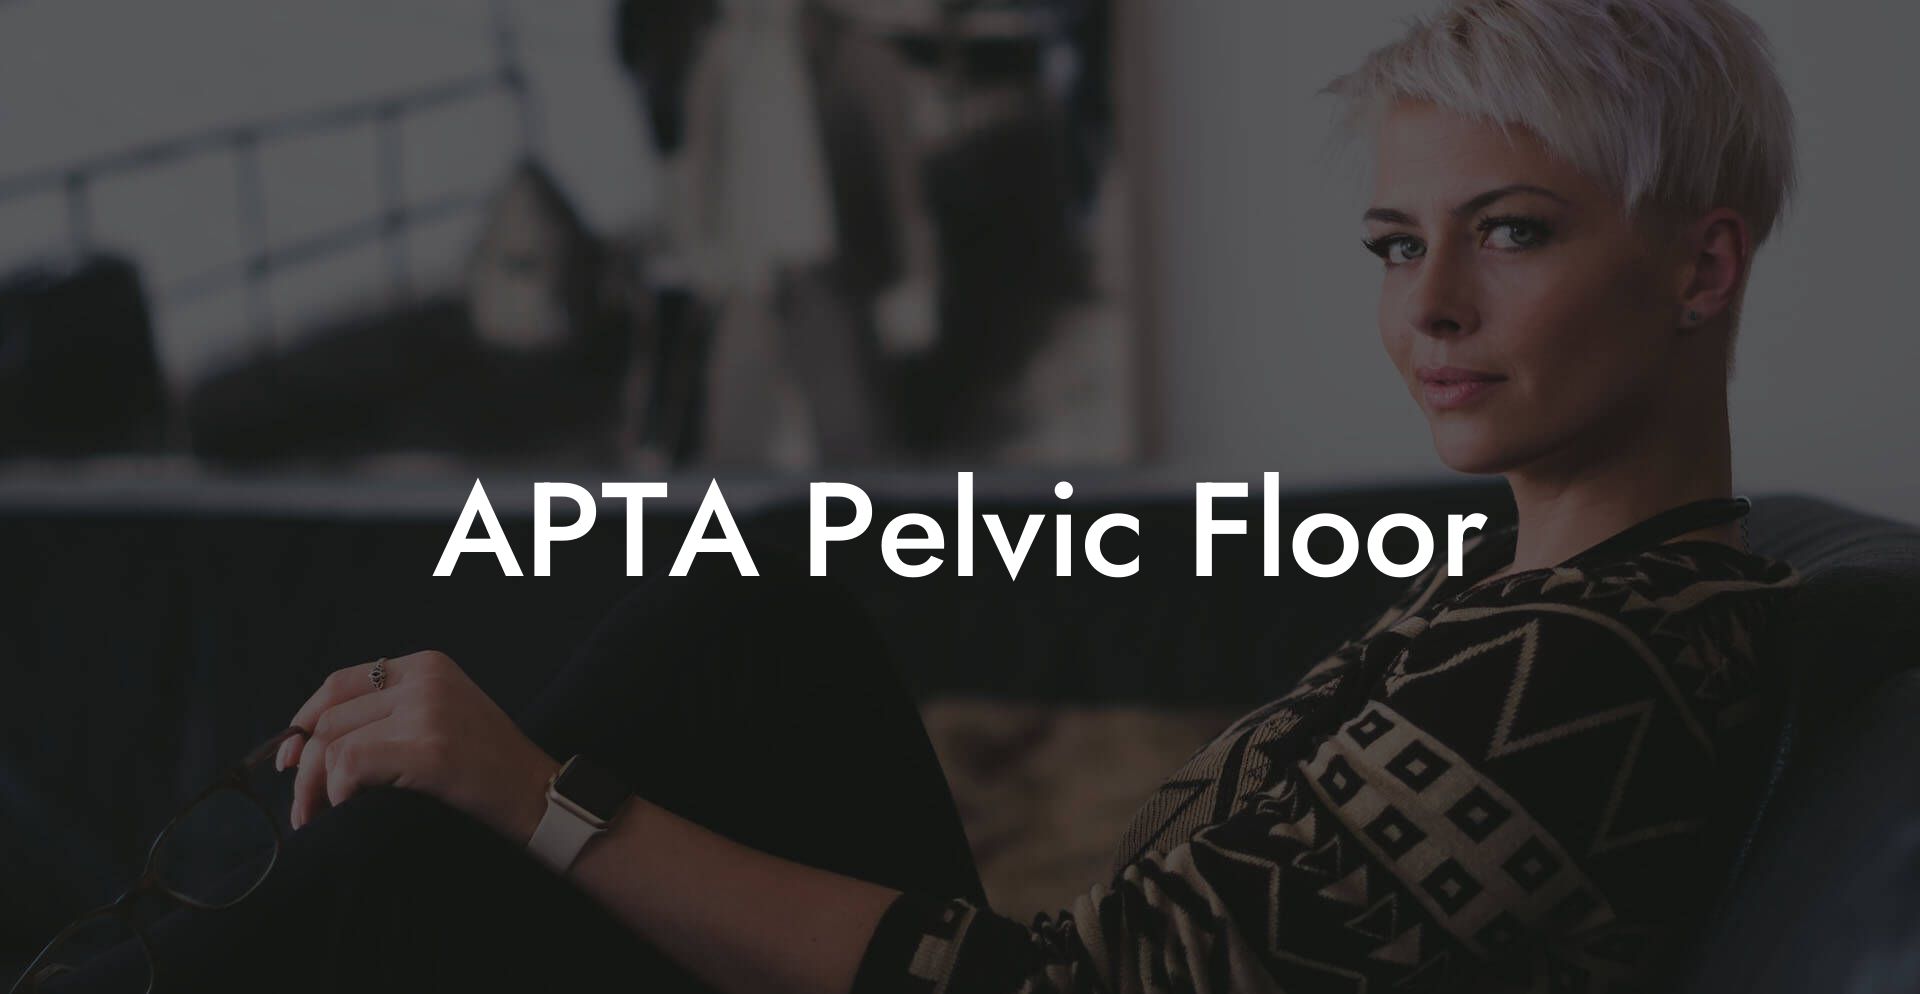 APTA Pelvic Floor